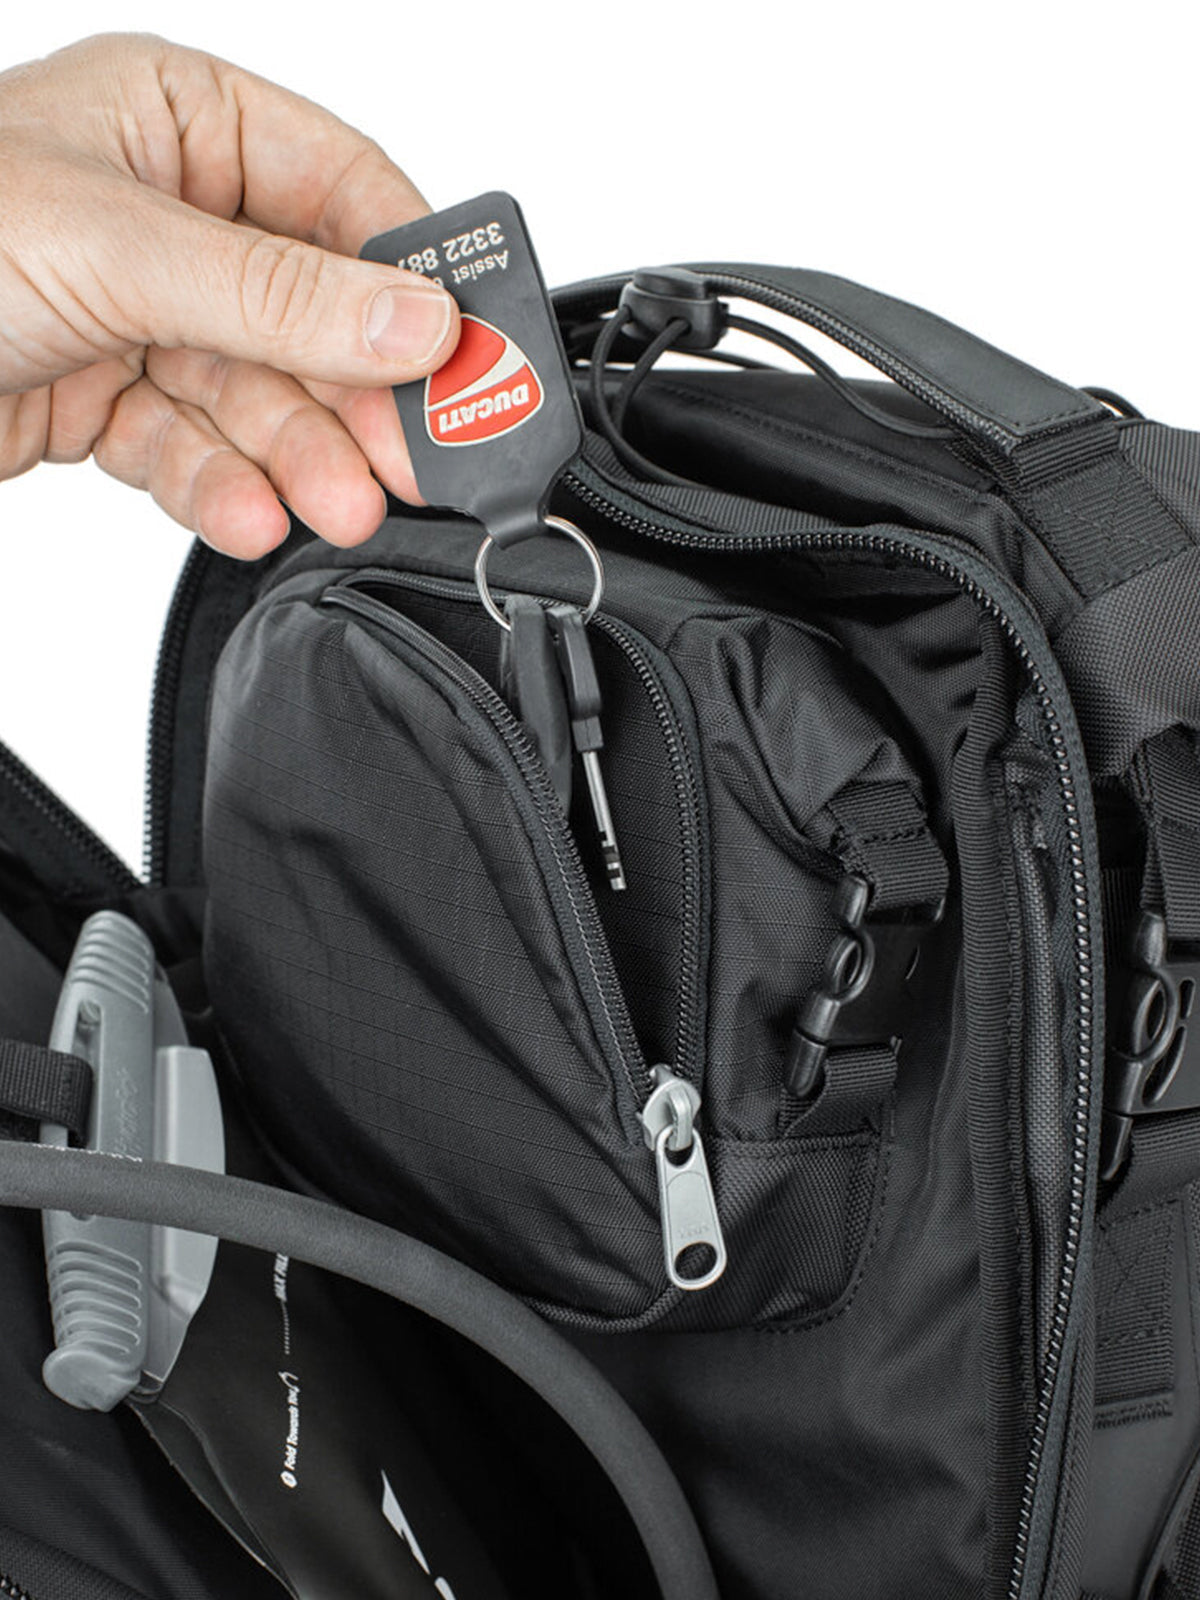 Kriega Trail18 Adventure Backpack with pocket for keys